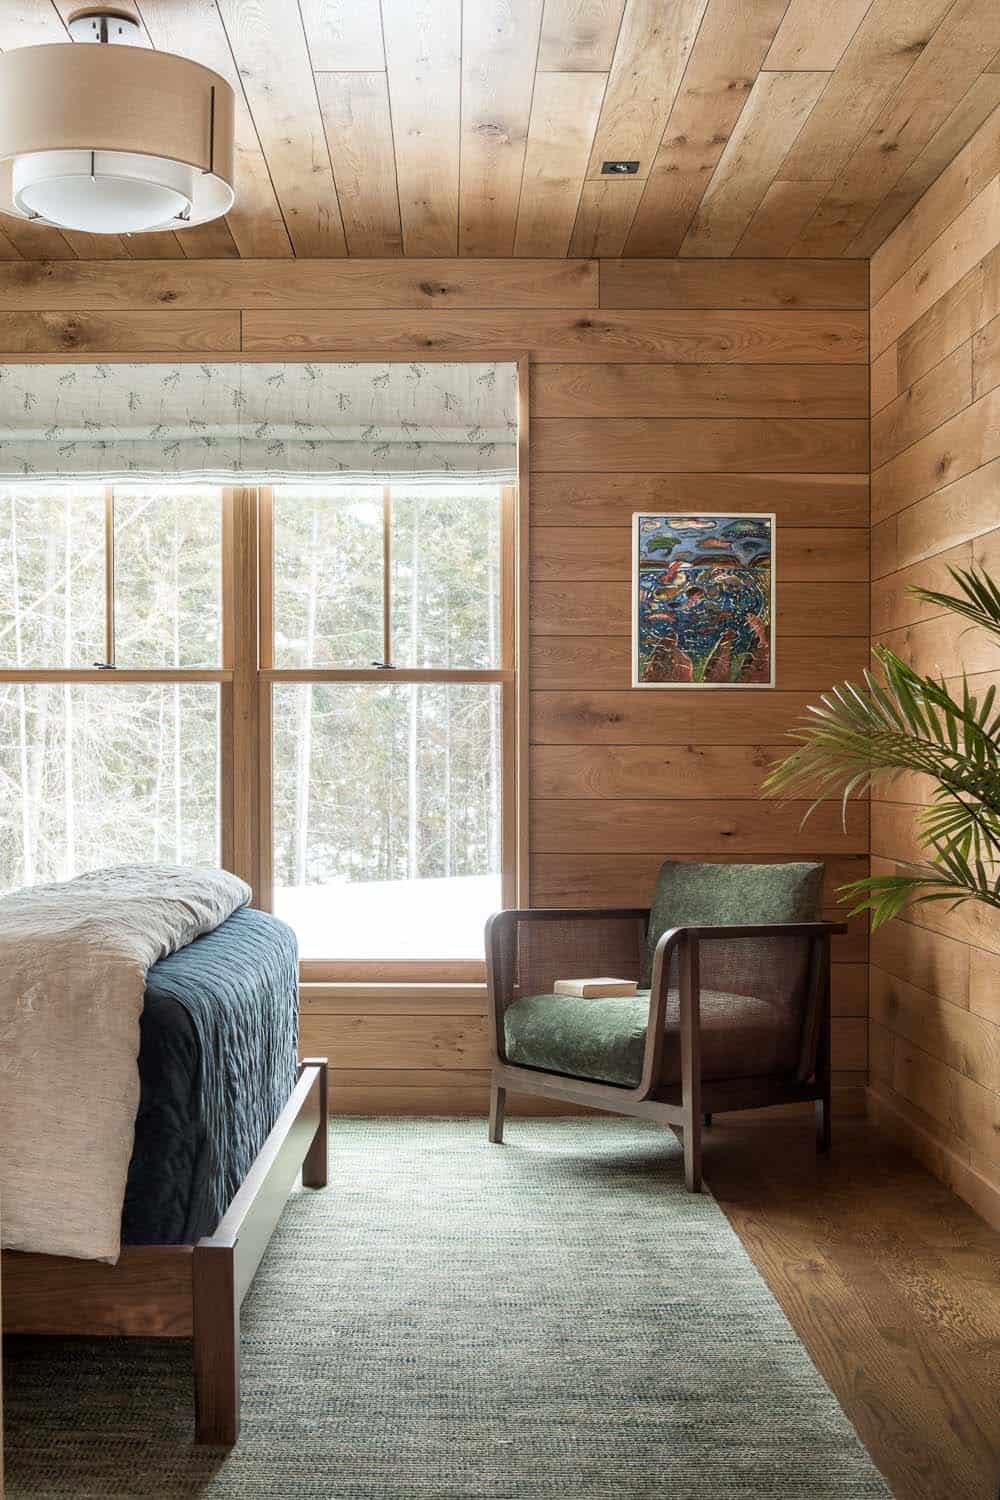 modern rustic bedroom